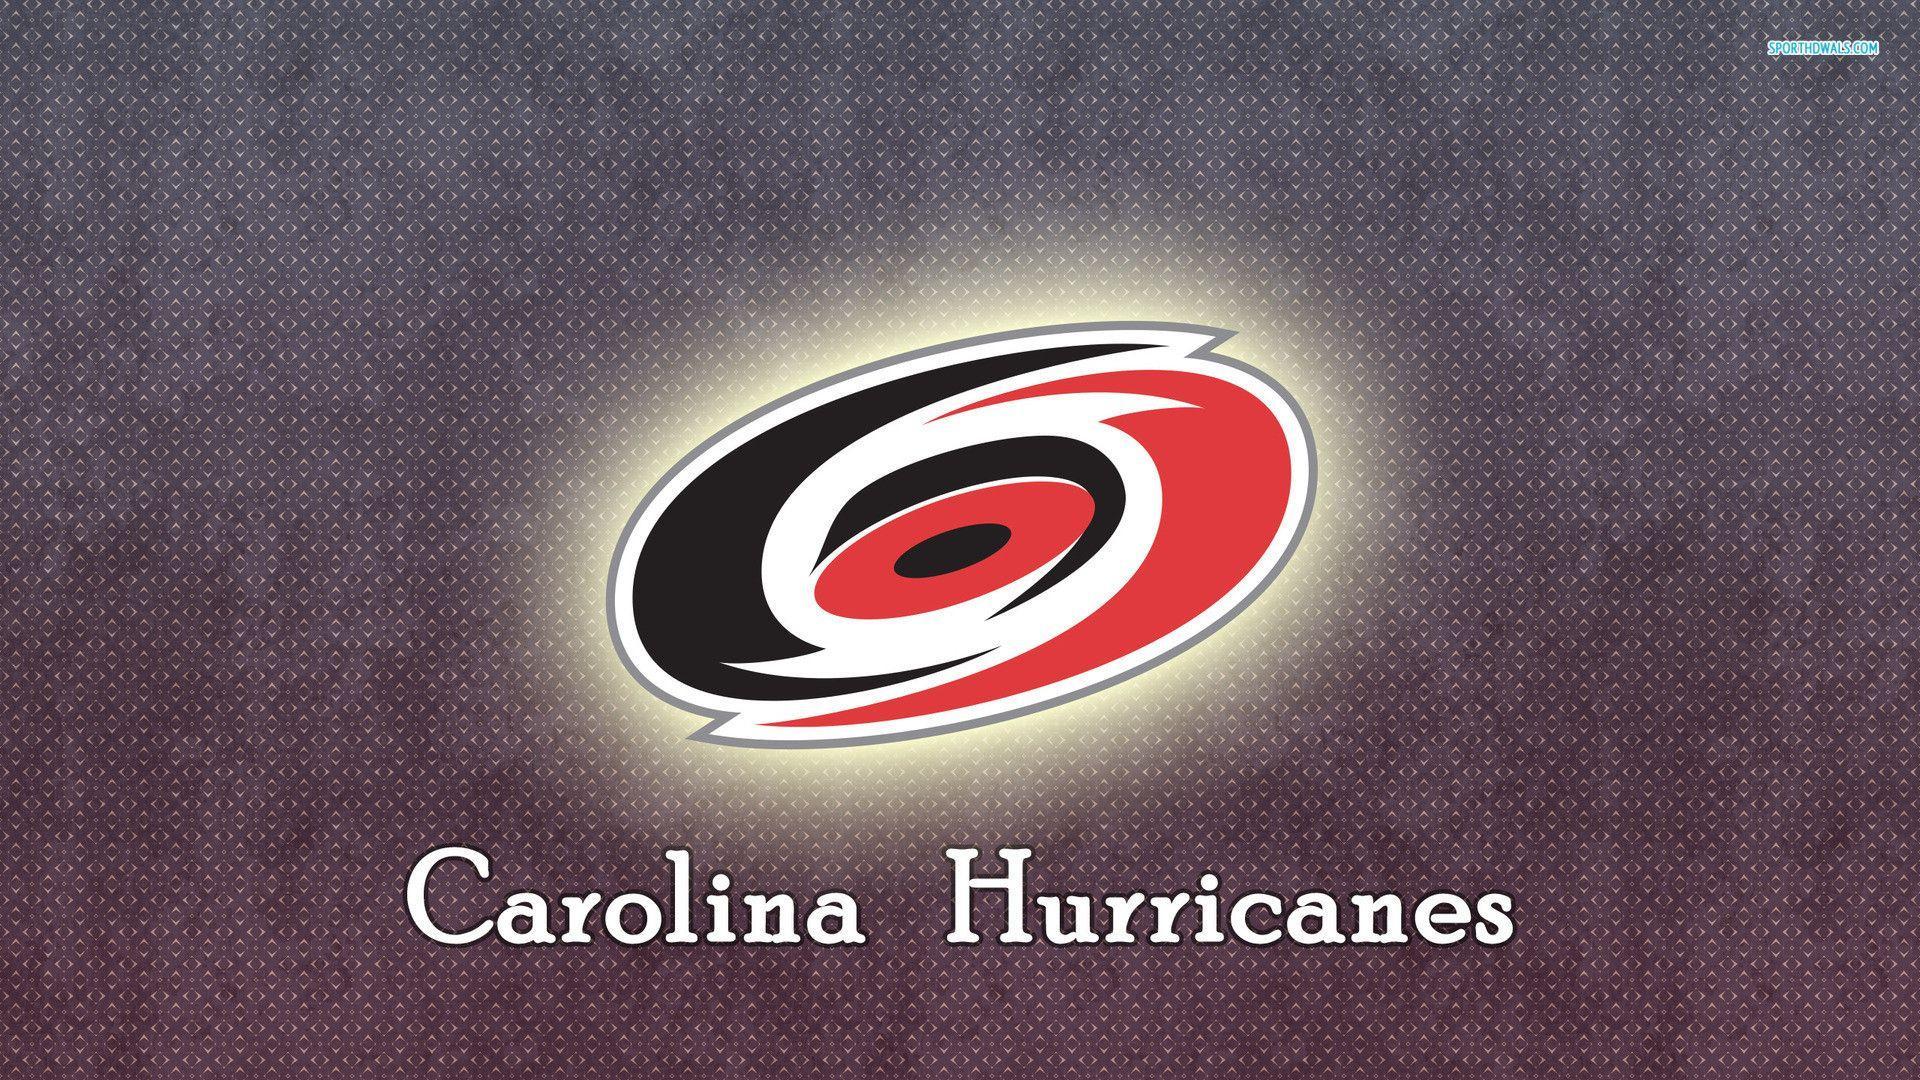 Carolina Hurricanes wallpaper #